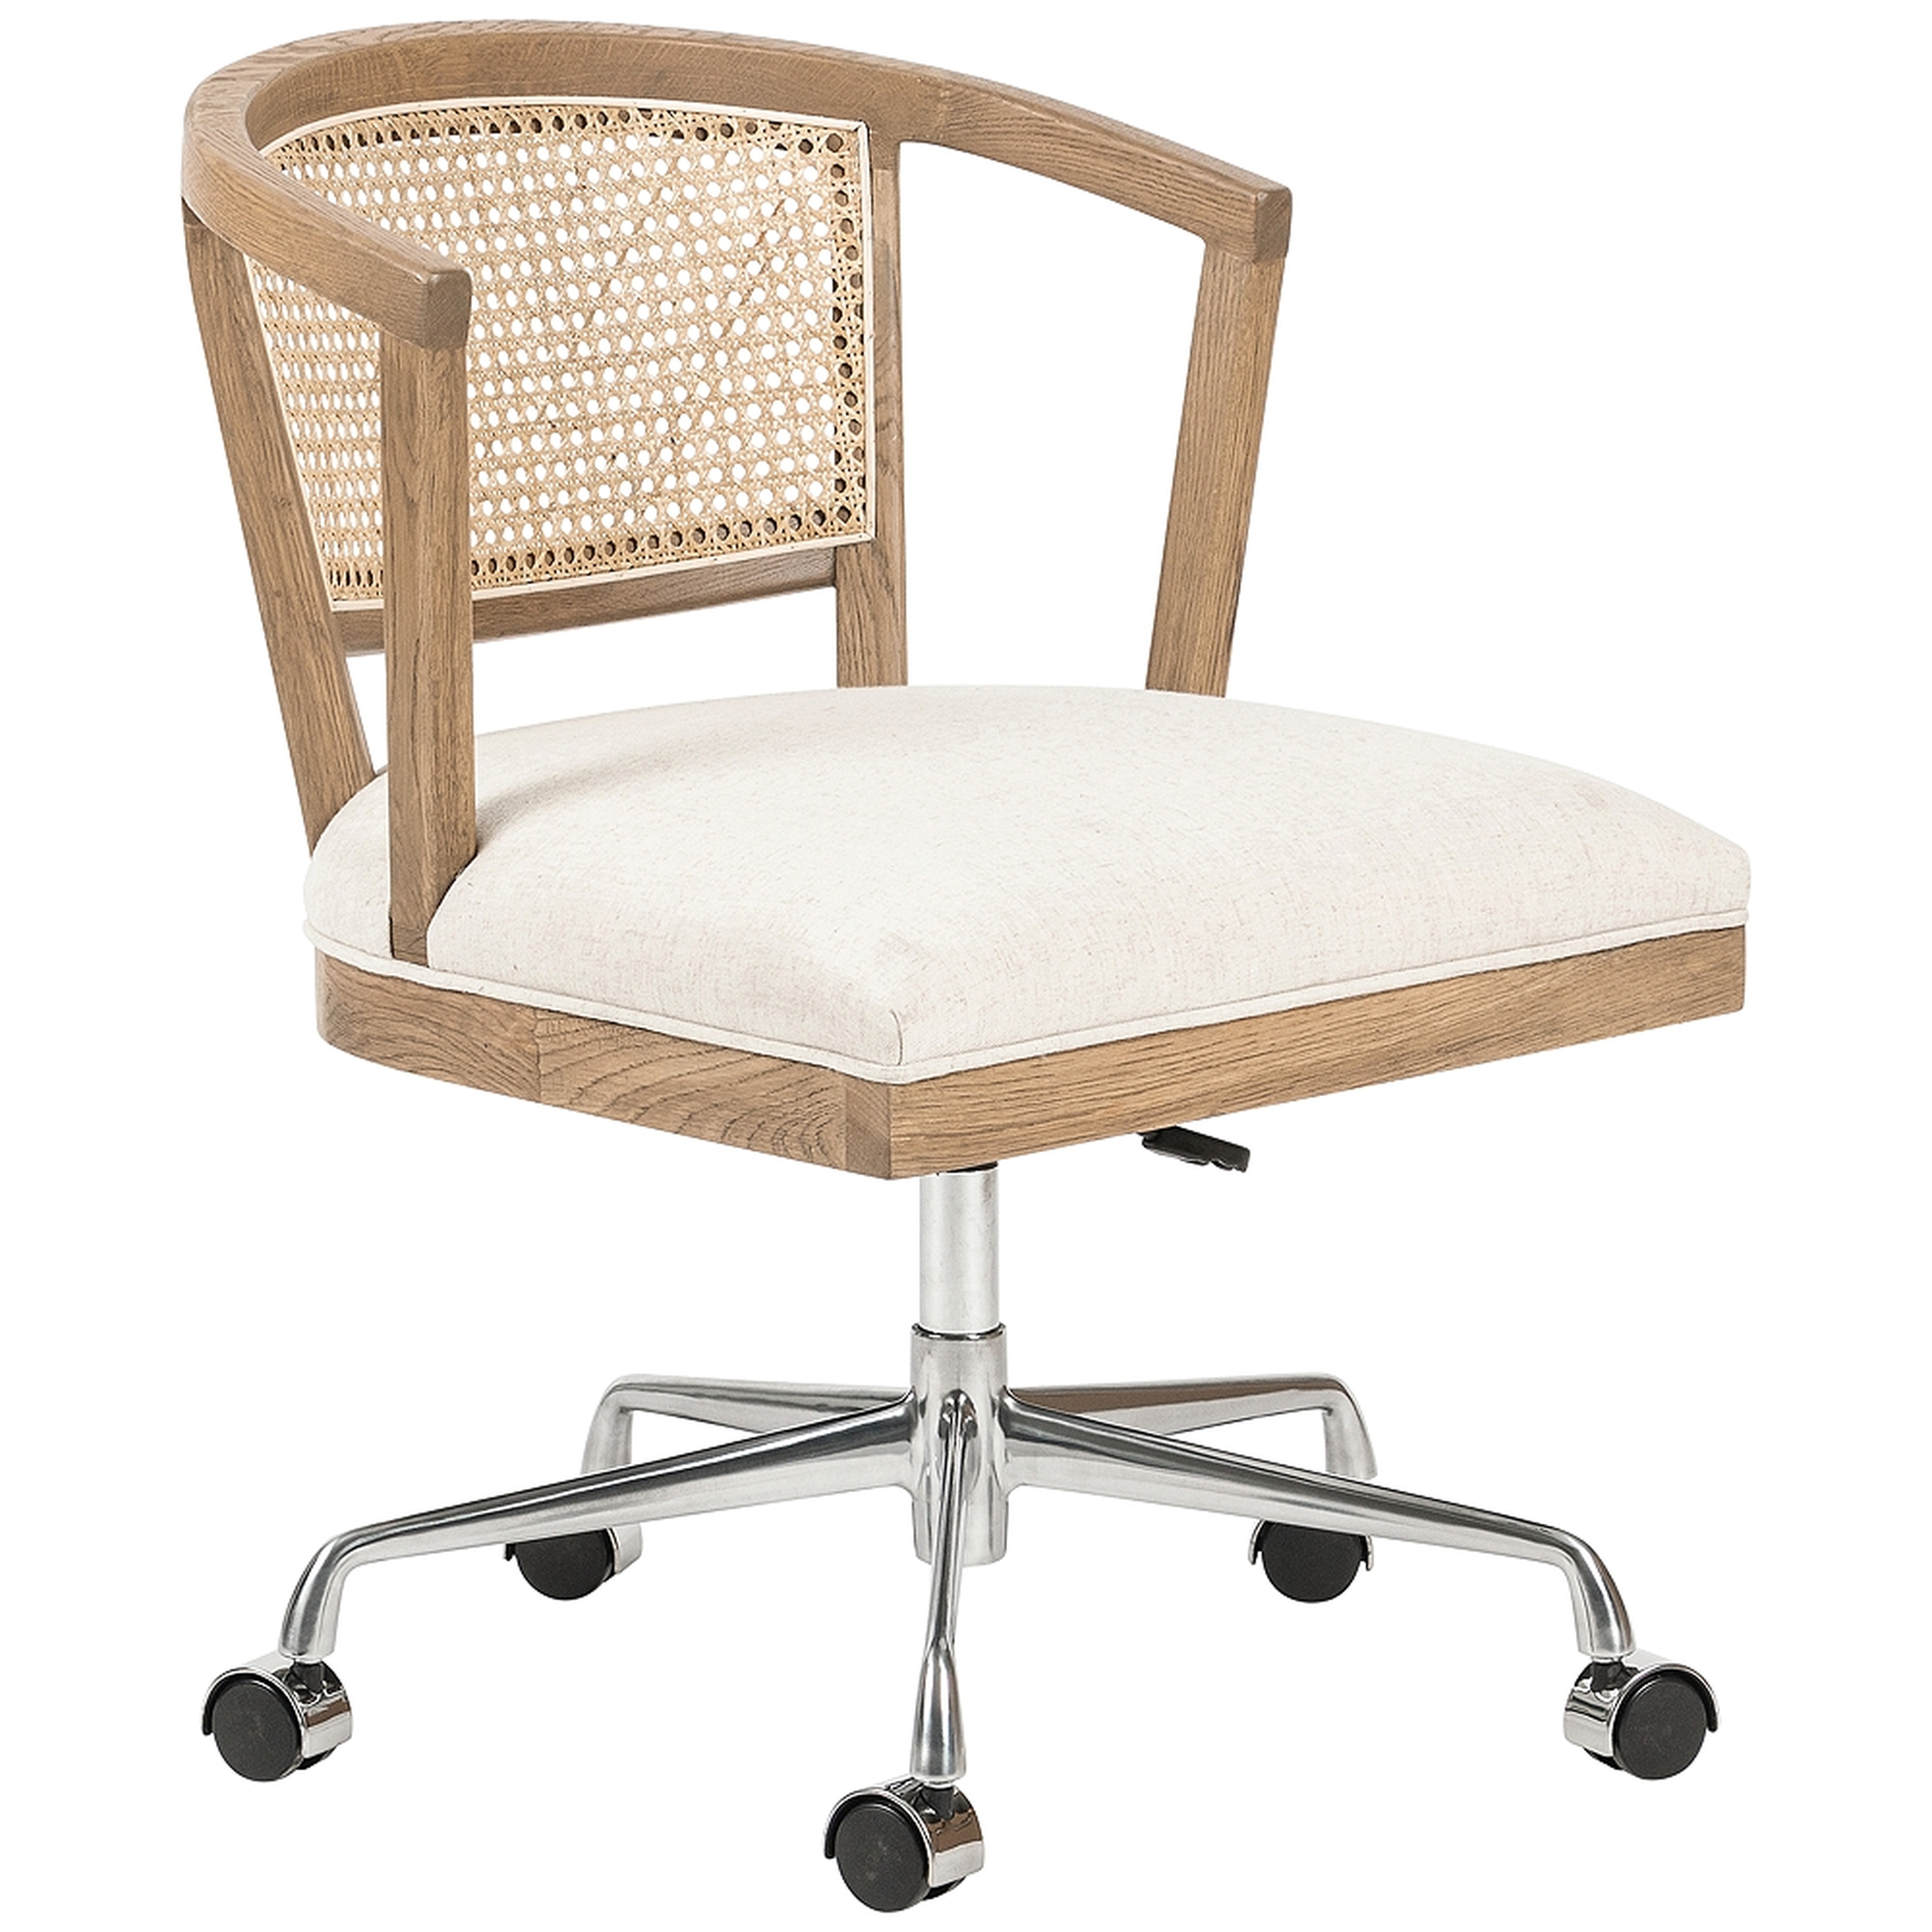 Alexa Mid-Century Oak and Cane Adjustable Swivel Desk Chair - Style # 97M53 - Lamps Plus